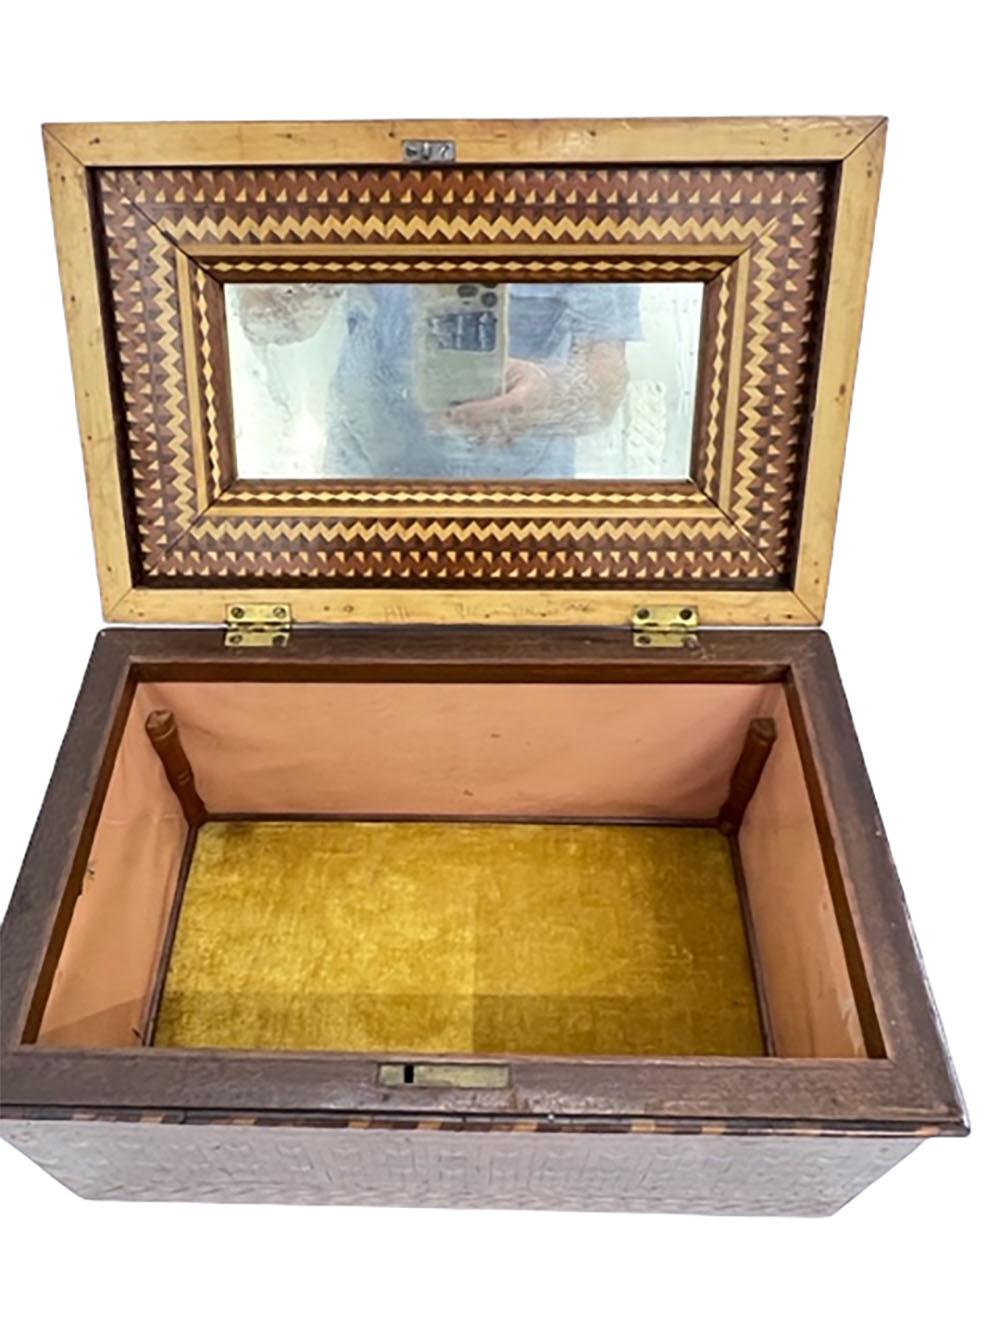 Large Tunbridge ware box with herringbone pattern inlaid parquetry. Circa 1840, England.